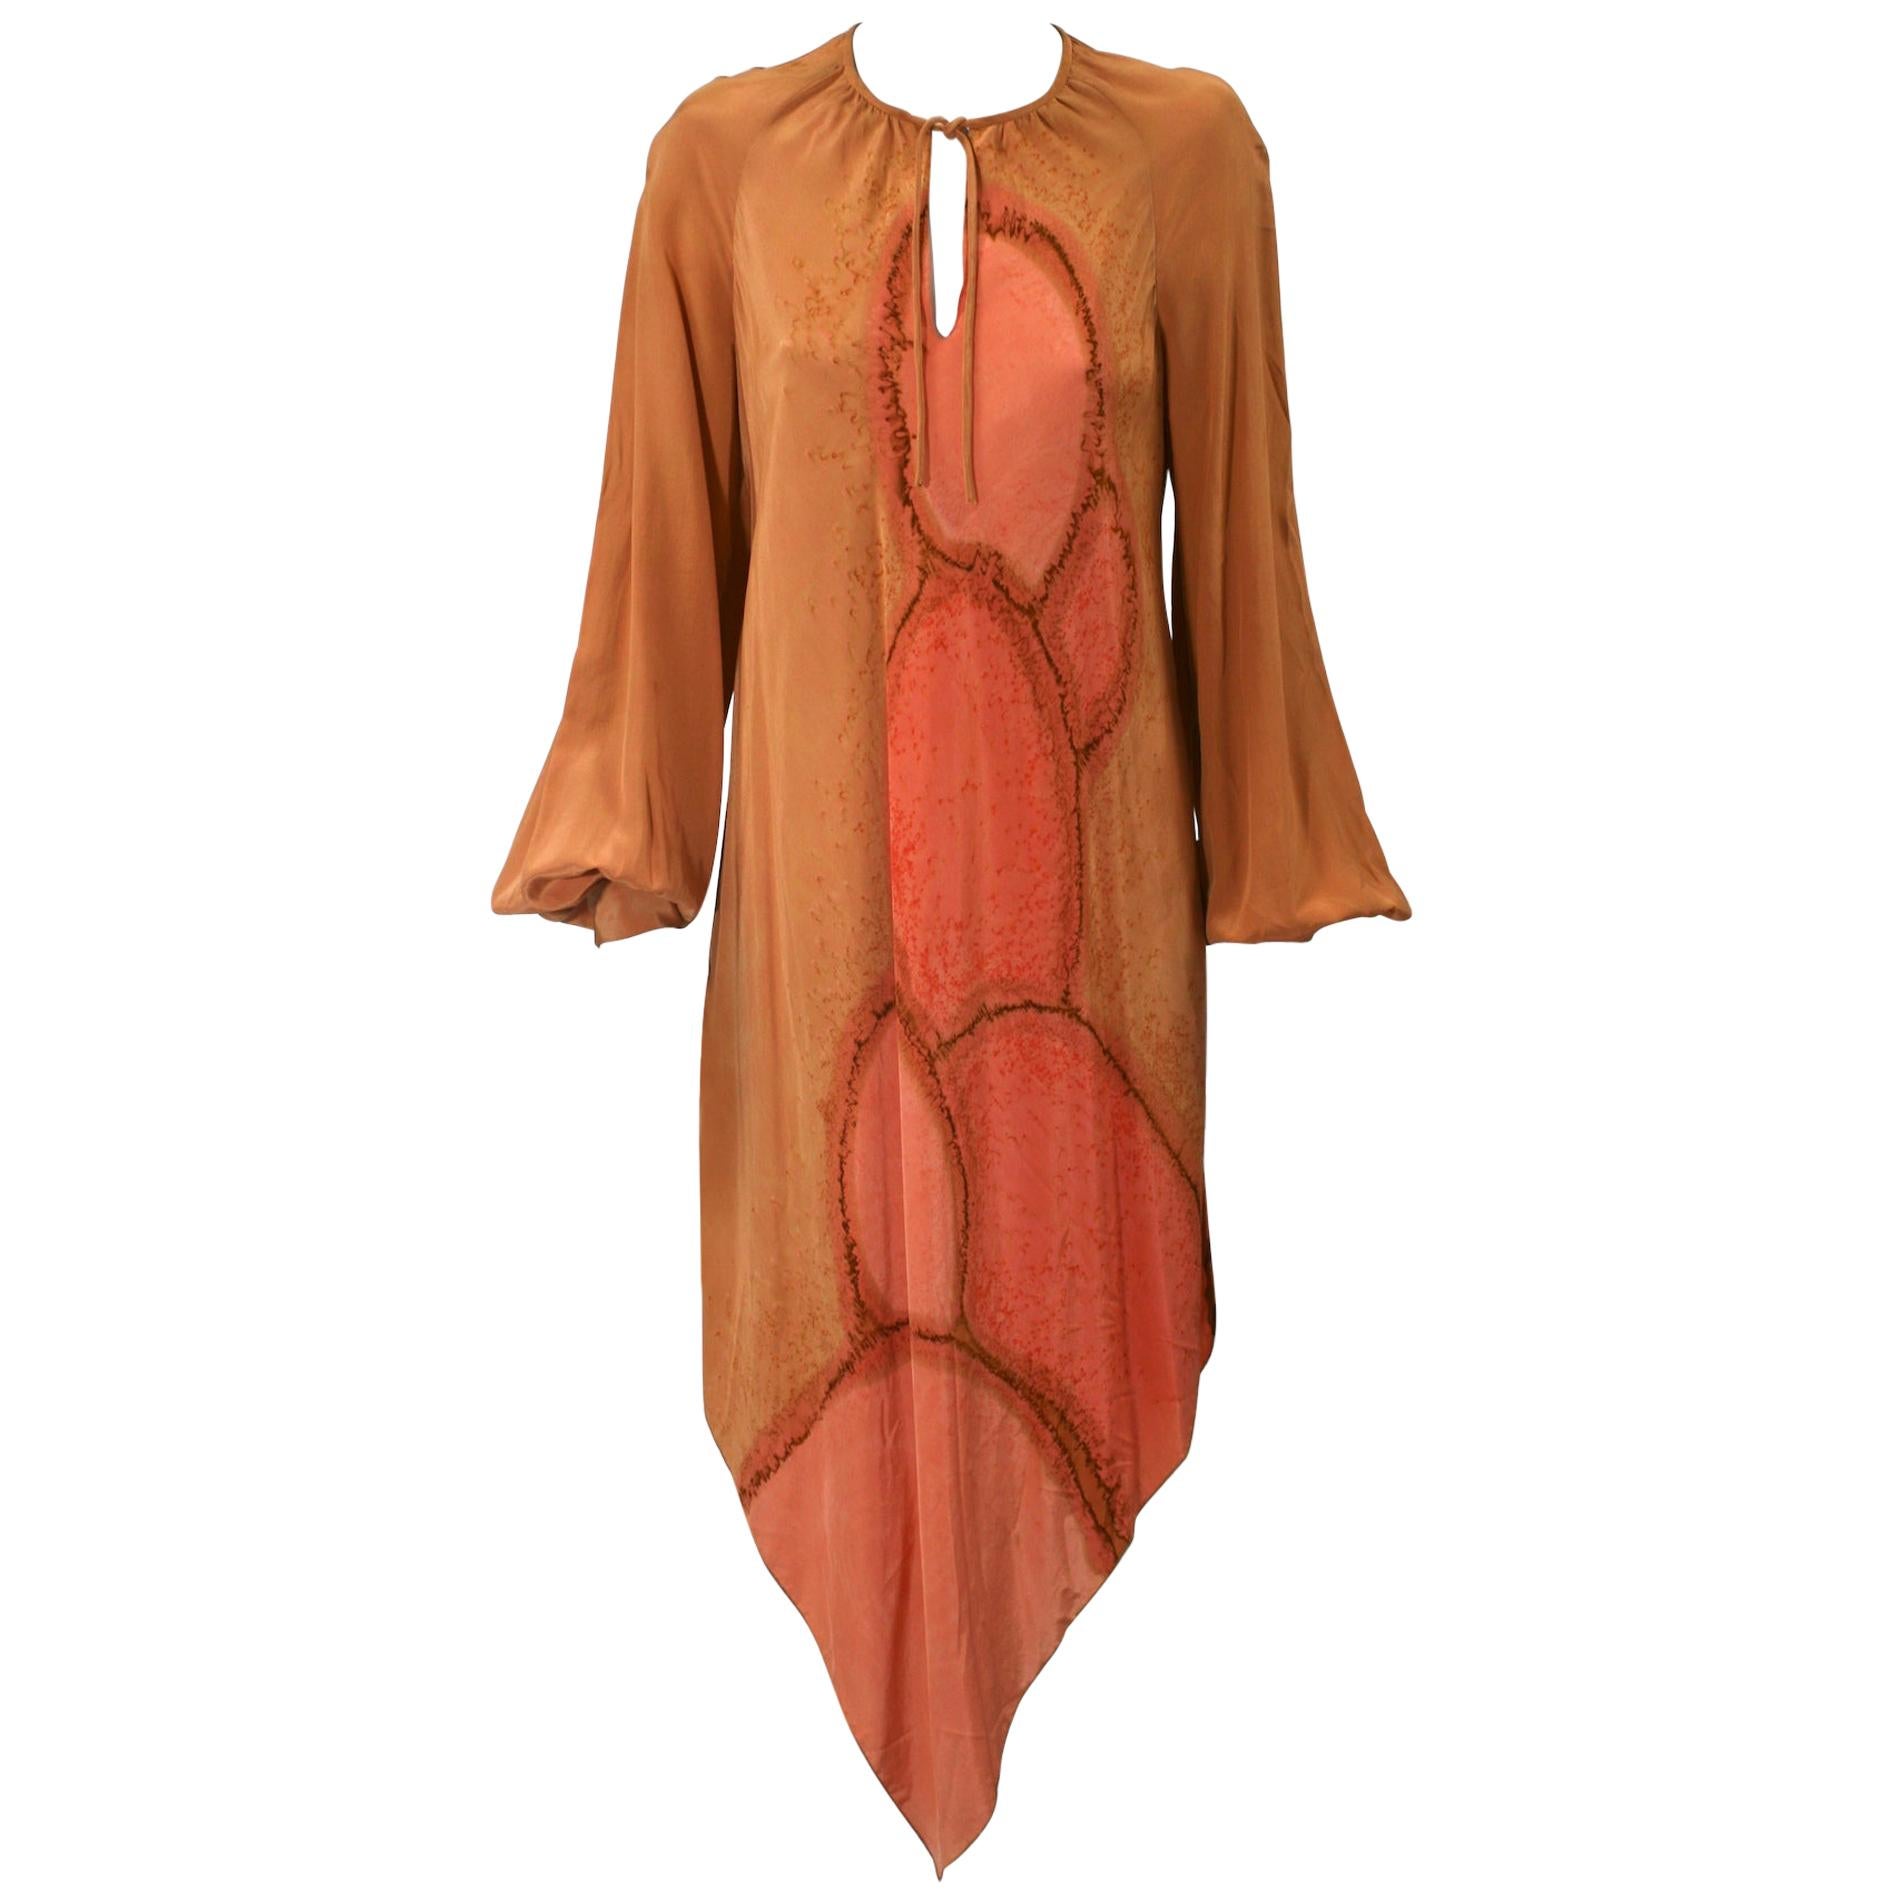  Autumnal Tie Dye Dress, Provenance, Wardrobe of Lillian Gish   For Sale